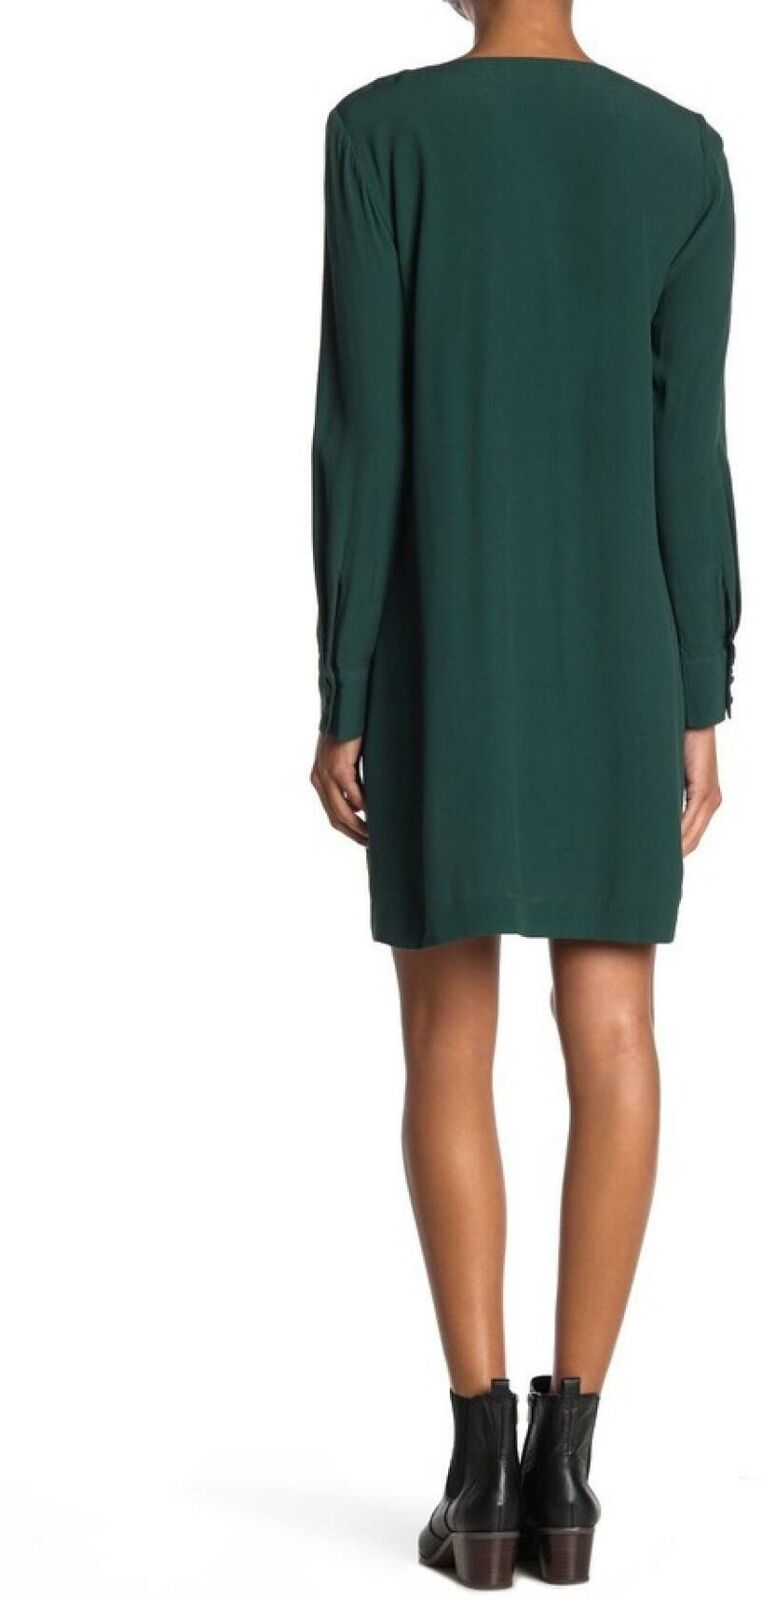 Madewell Womens XS Spruce Green Button Front Long Sleeve Novel Mini Dress